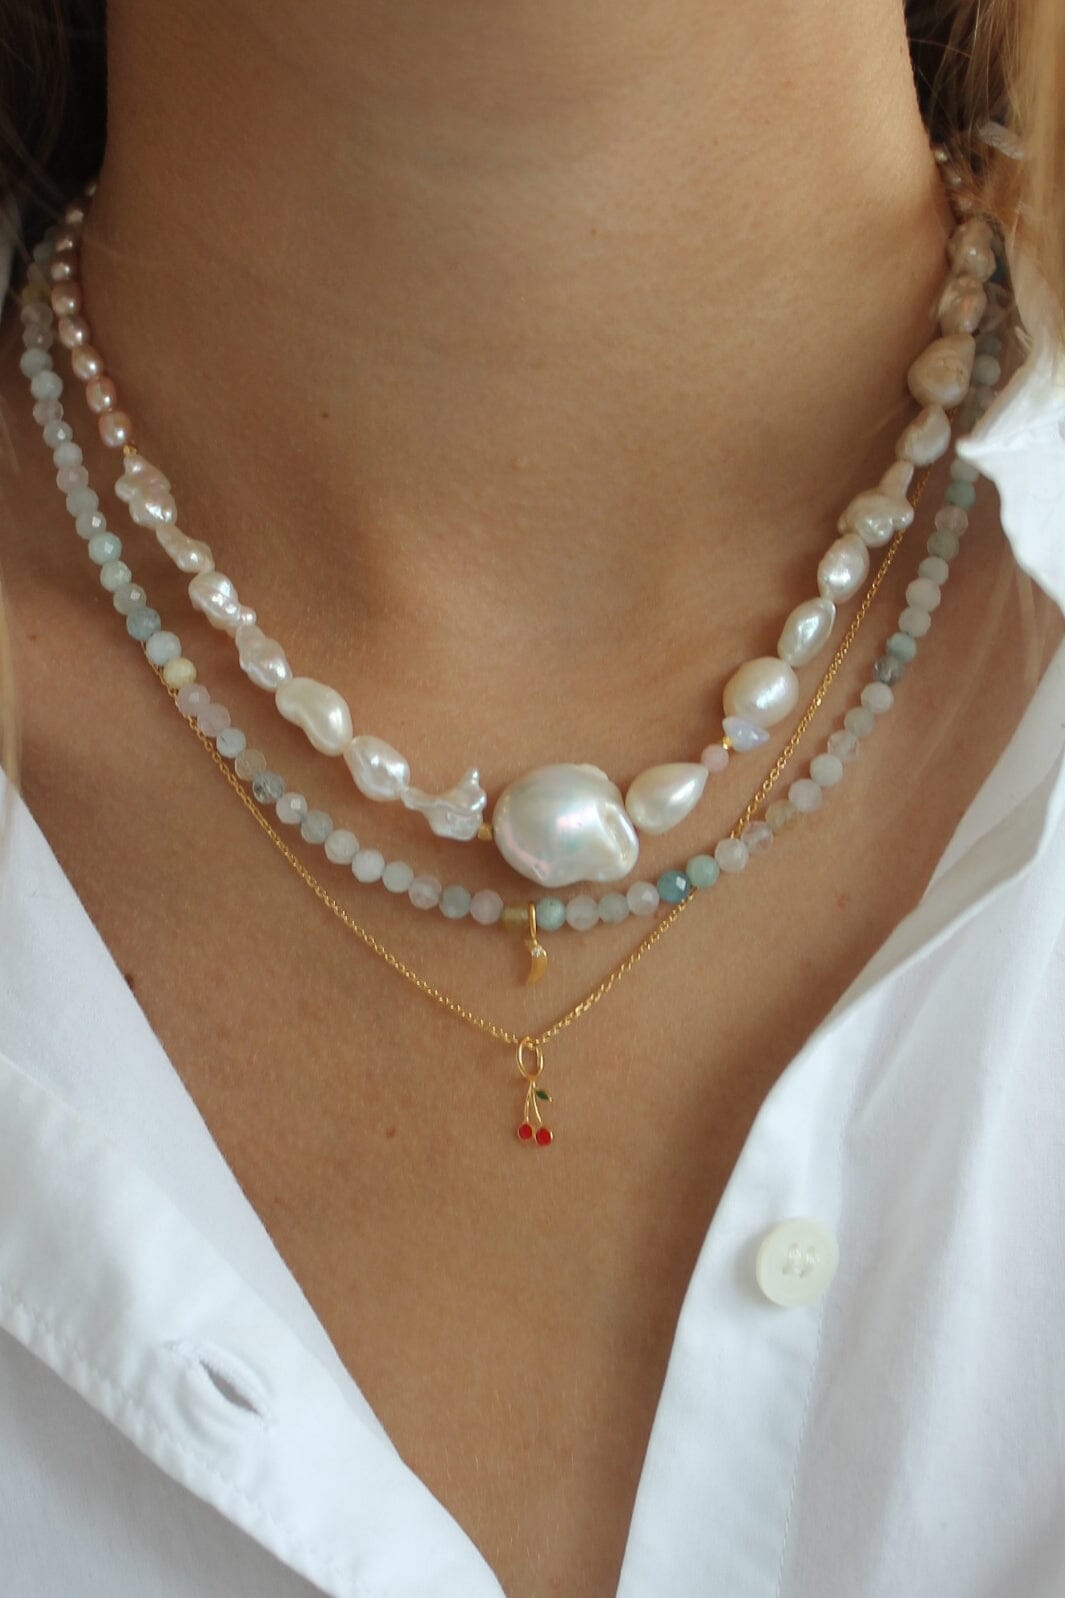 Stine A - Chunky Glamour Pearl Necklace - White & Rose - 2049-02-Os Halskæder 